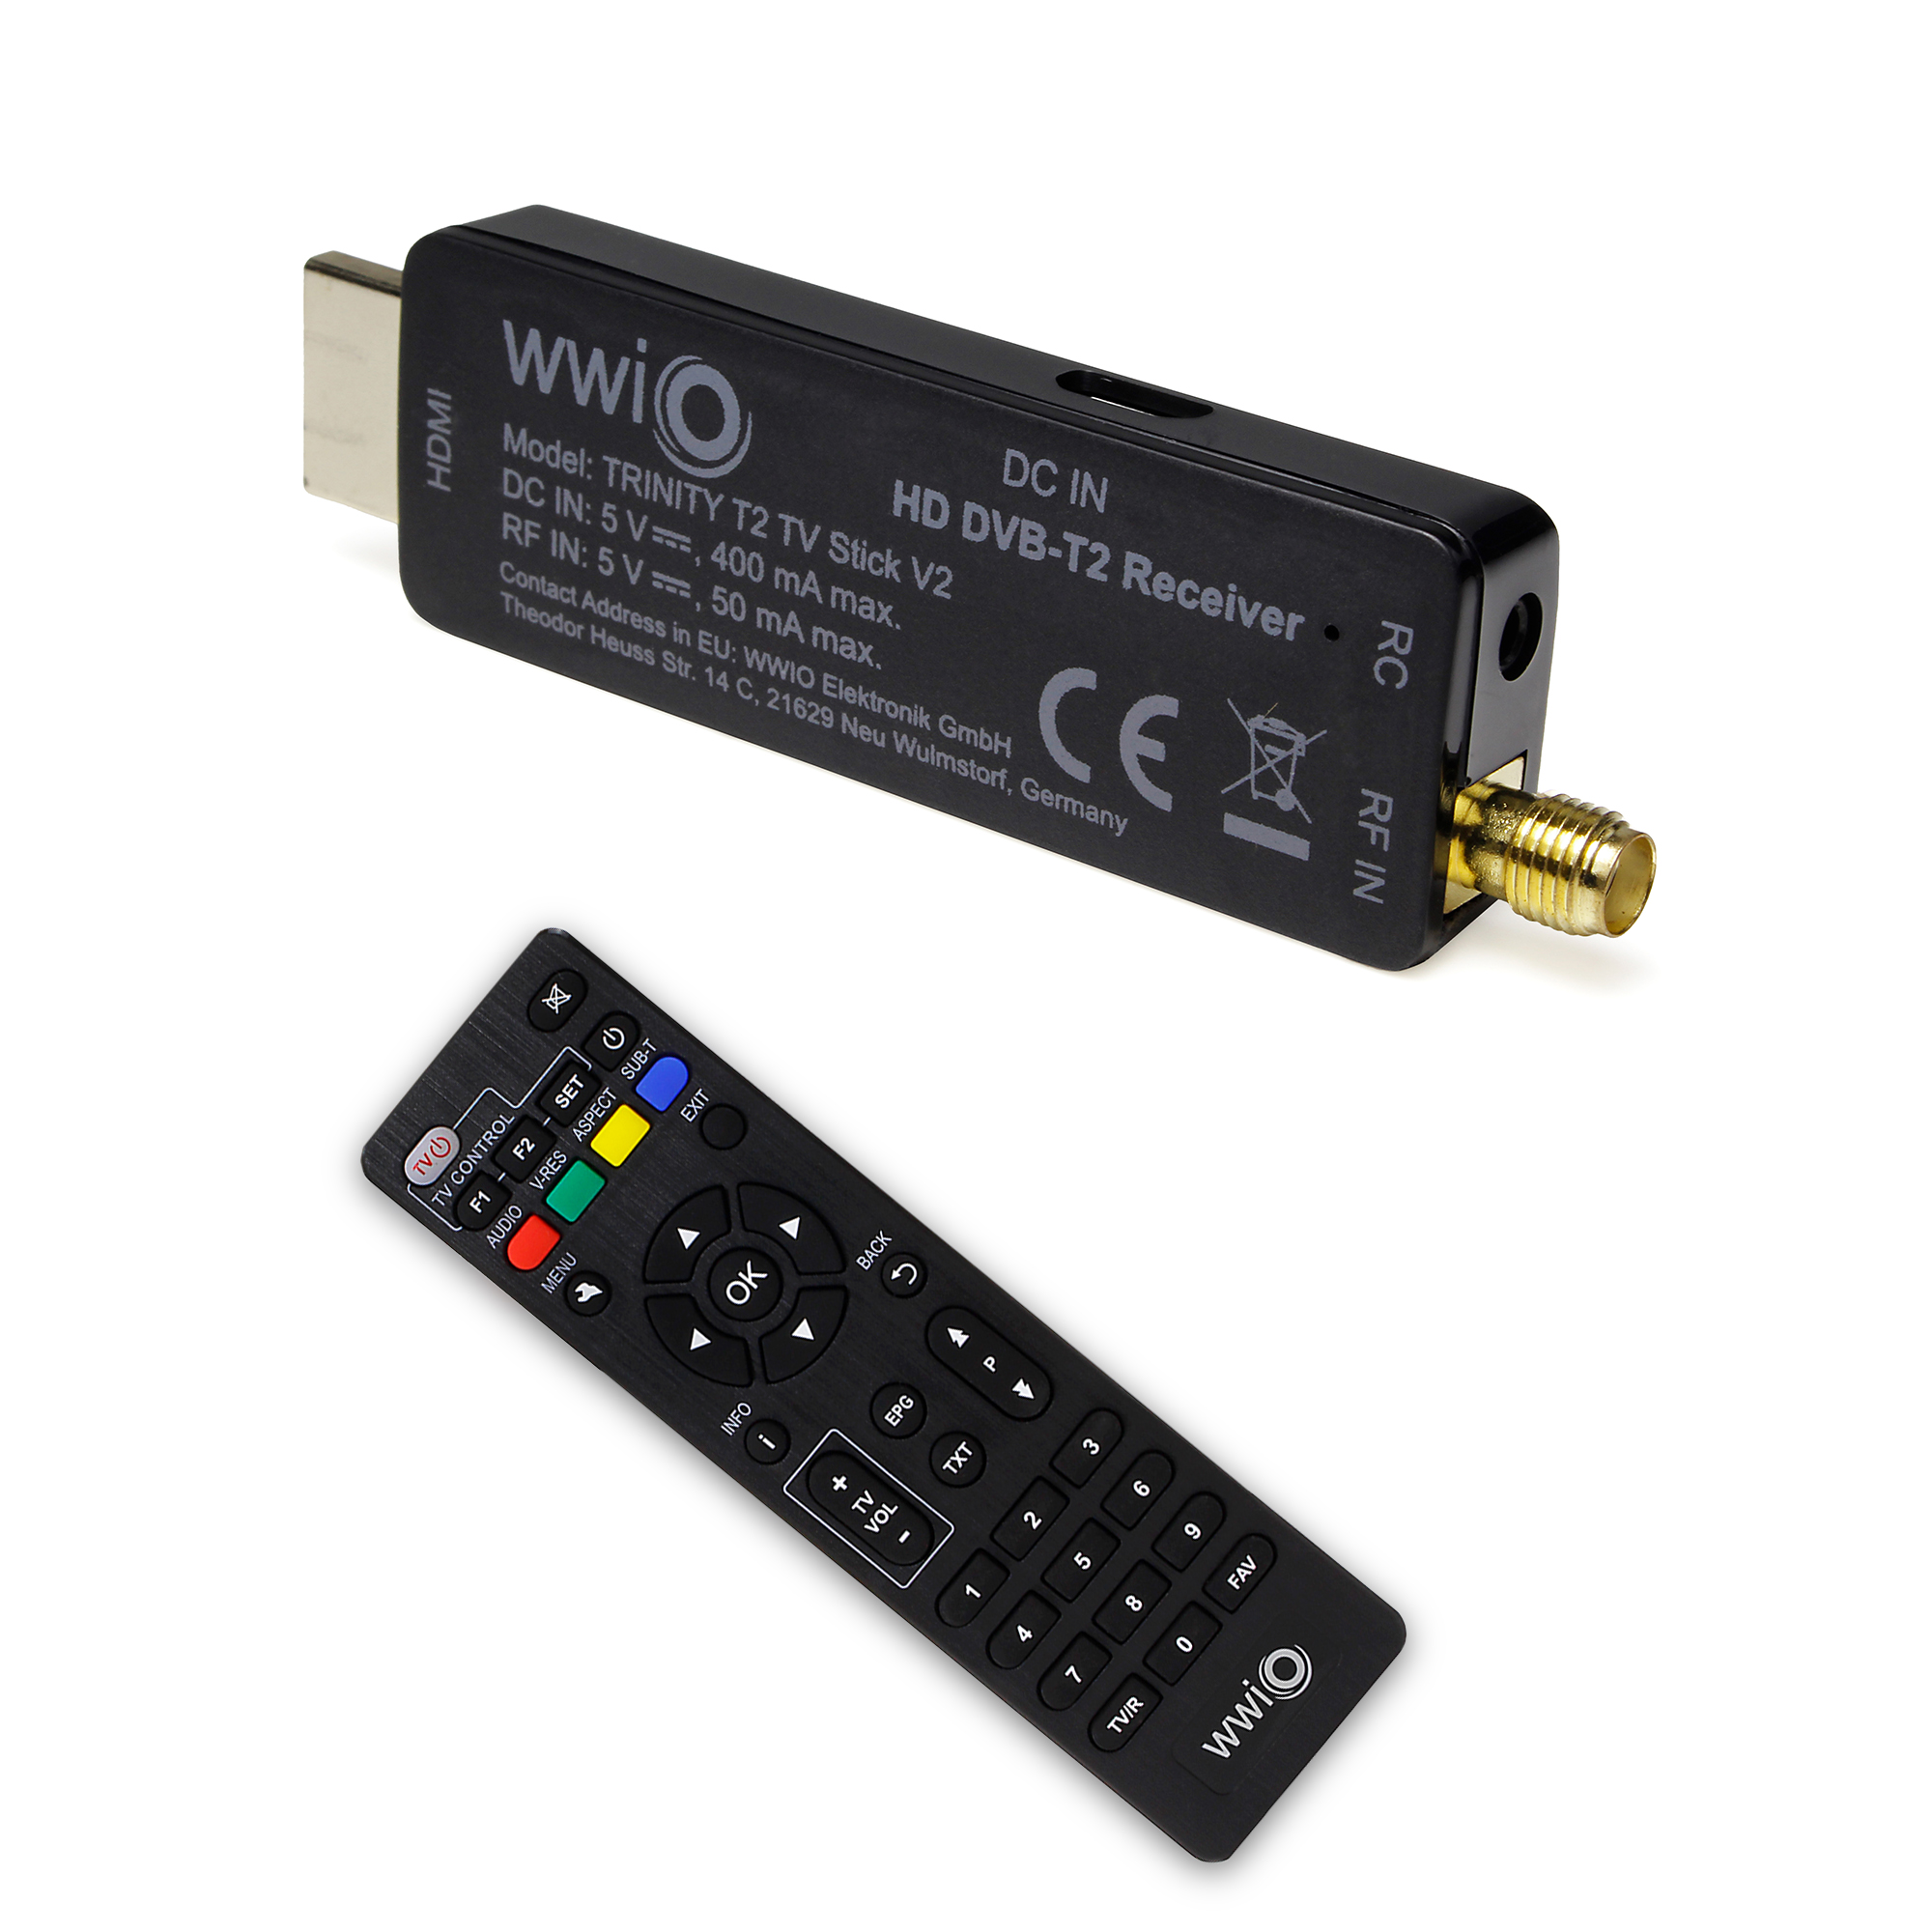 1920x1080 HD Receiver 2 T2 bis WWIO DVB-T2 in FULL TRINITY 1 DVB-T2 Receiver RCU WWIO Auflösung Stick Stick Kompakter TV